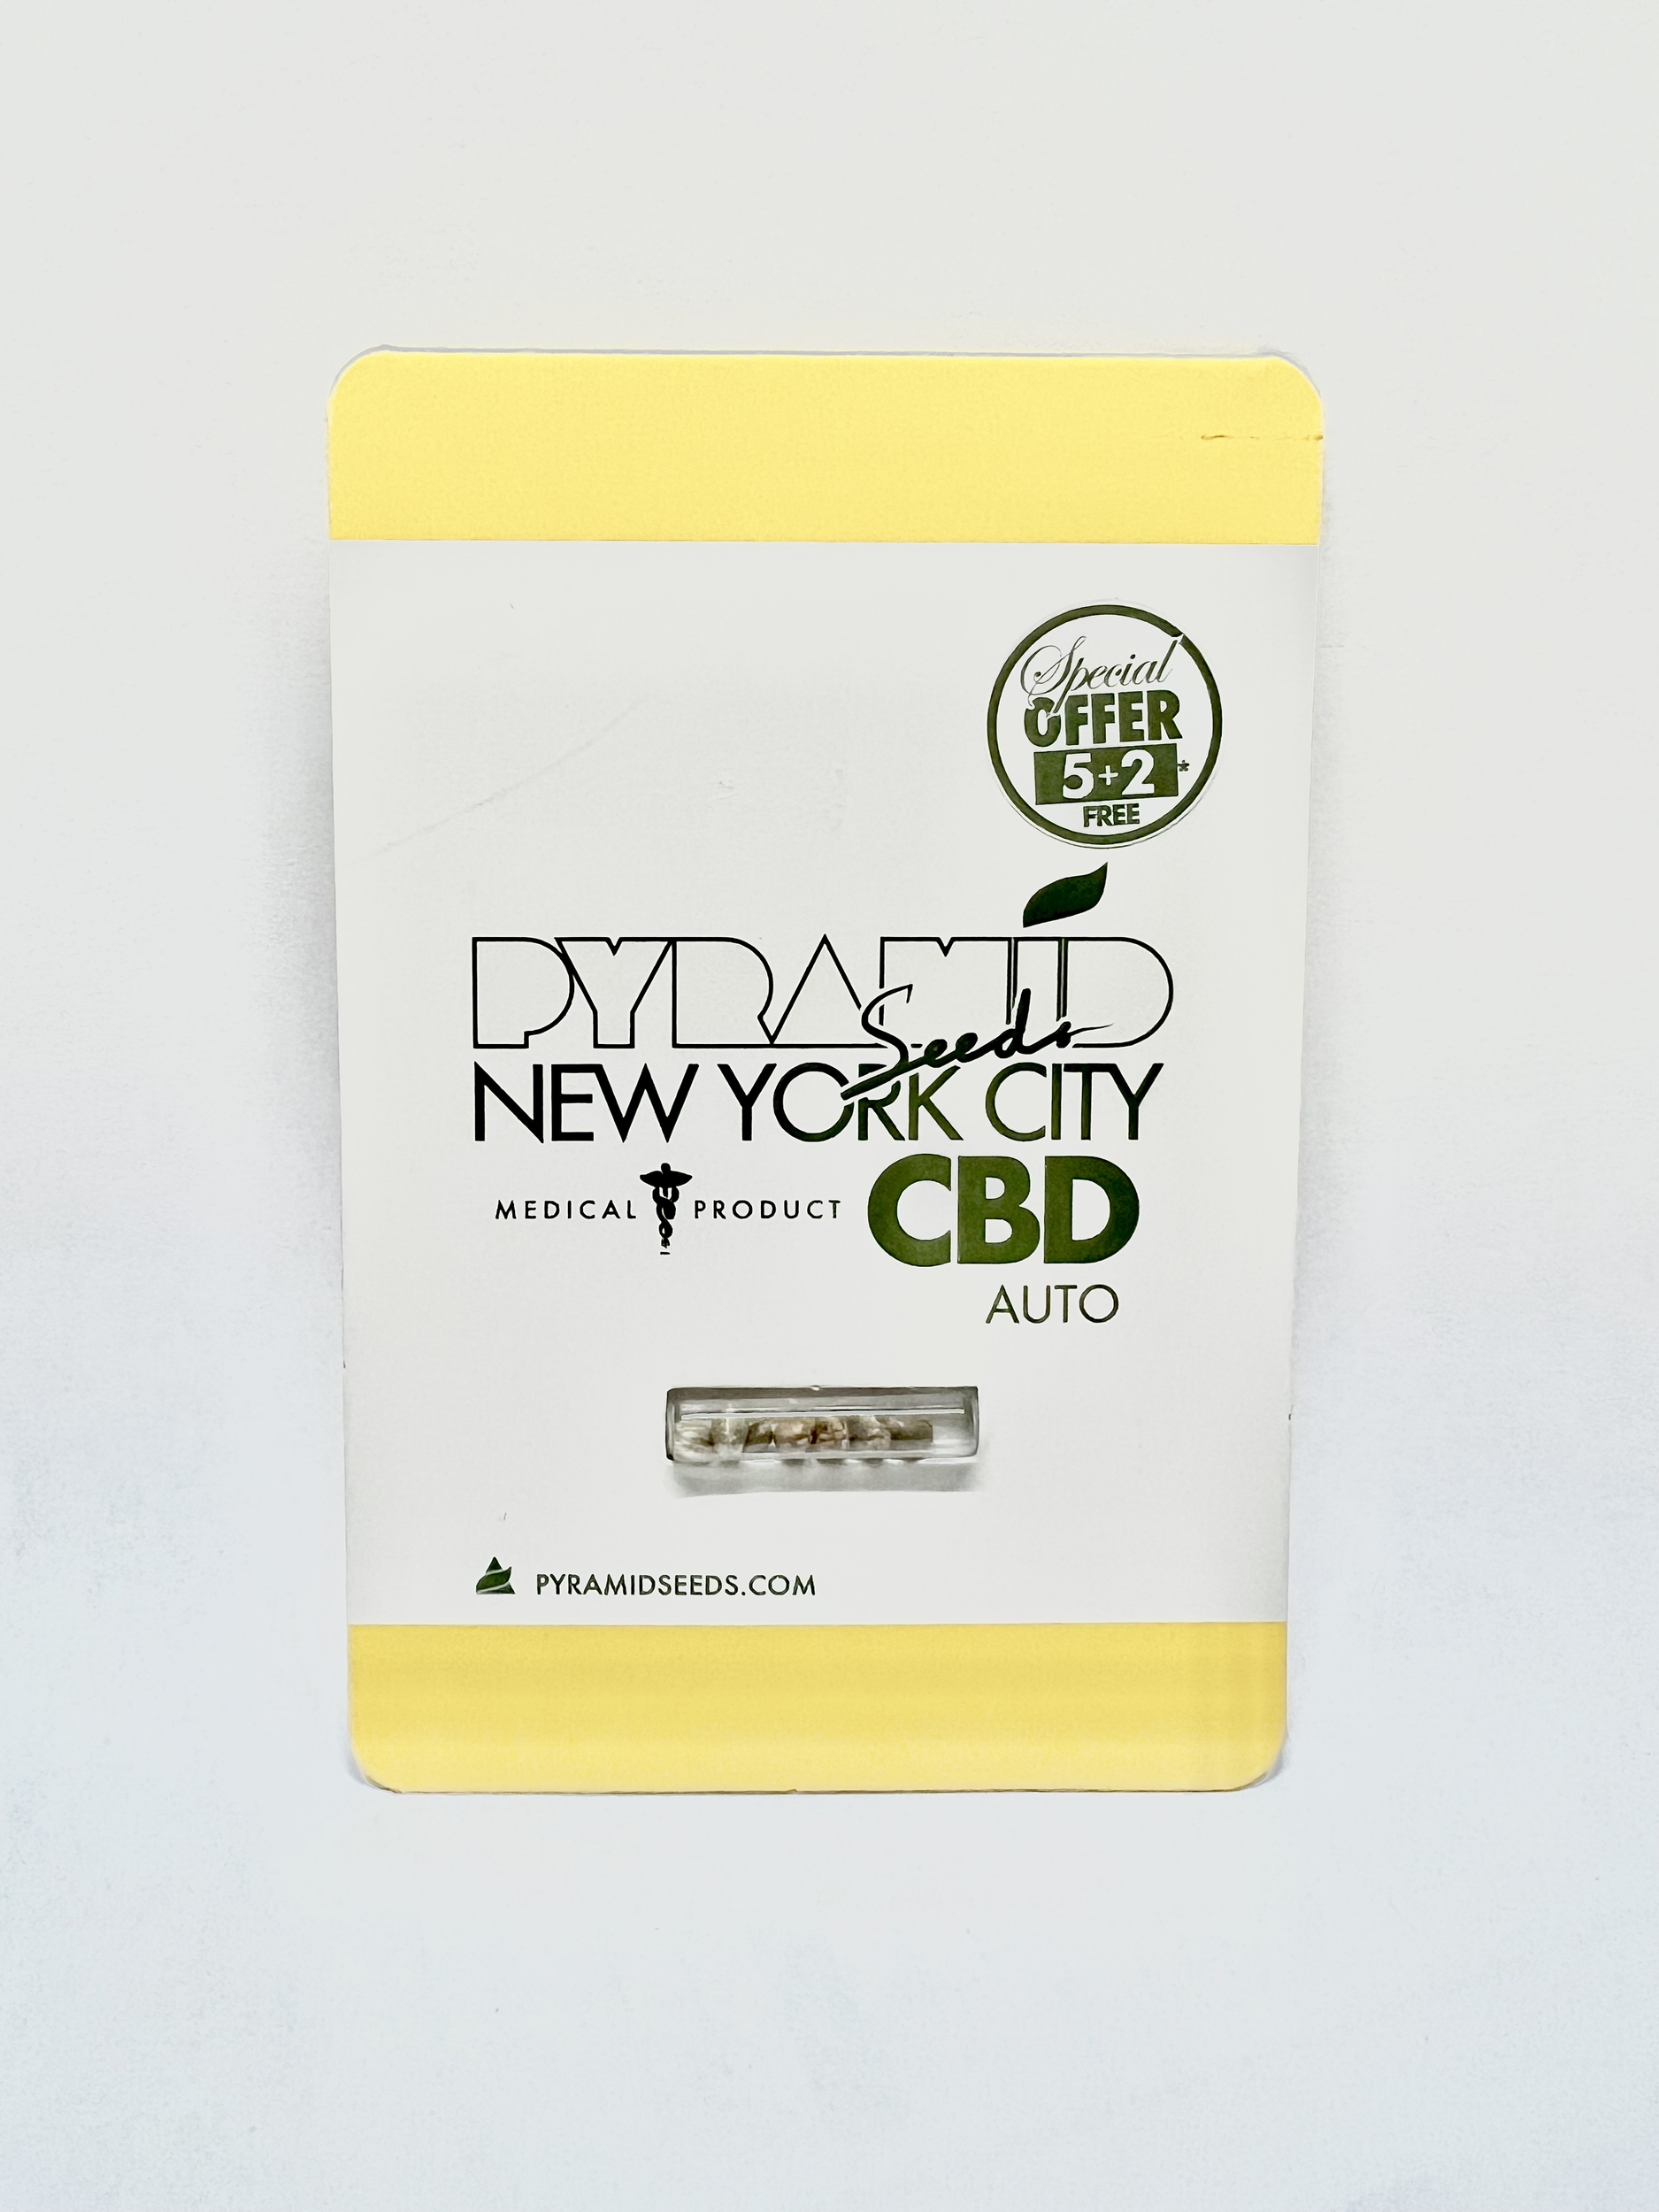 Auto New York City CBD - Pyramid Seeds